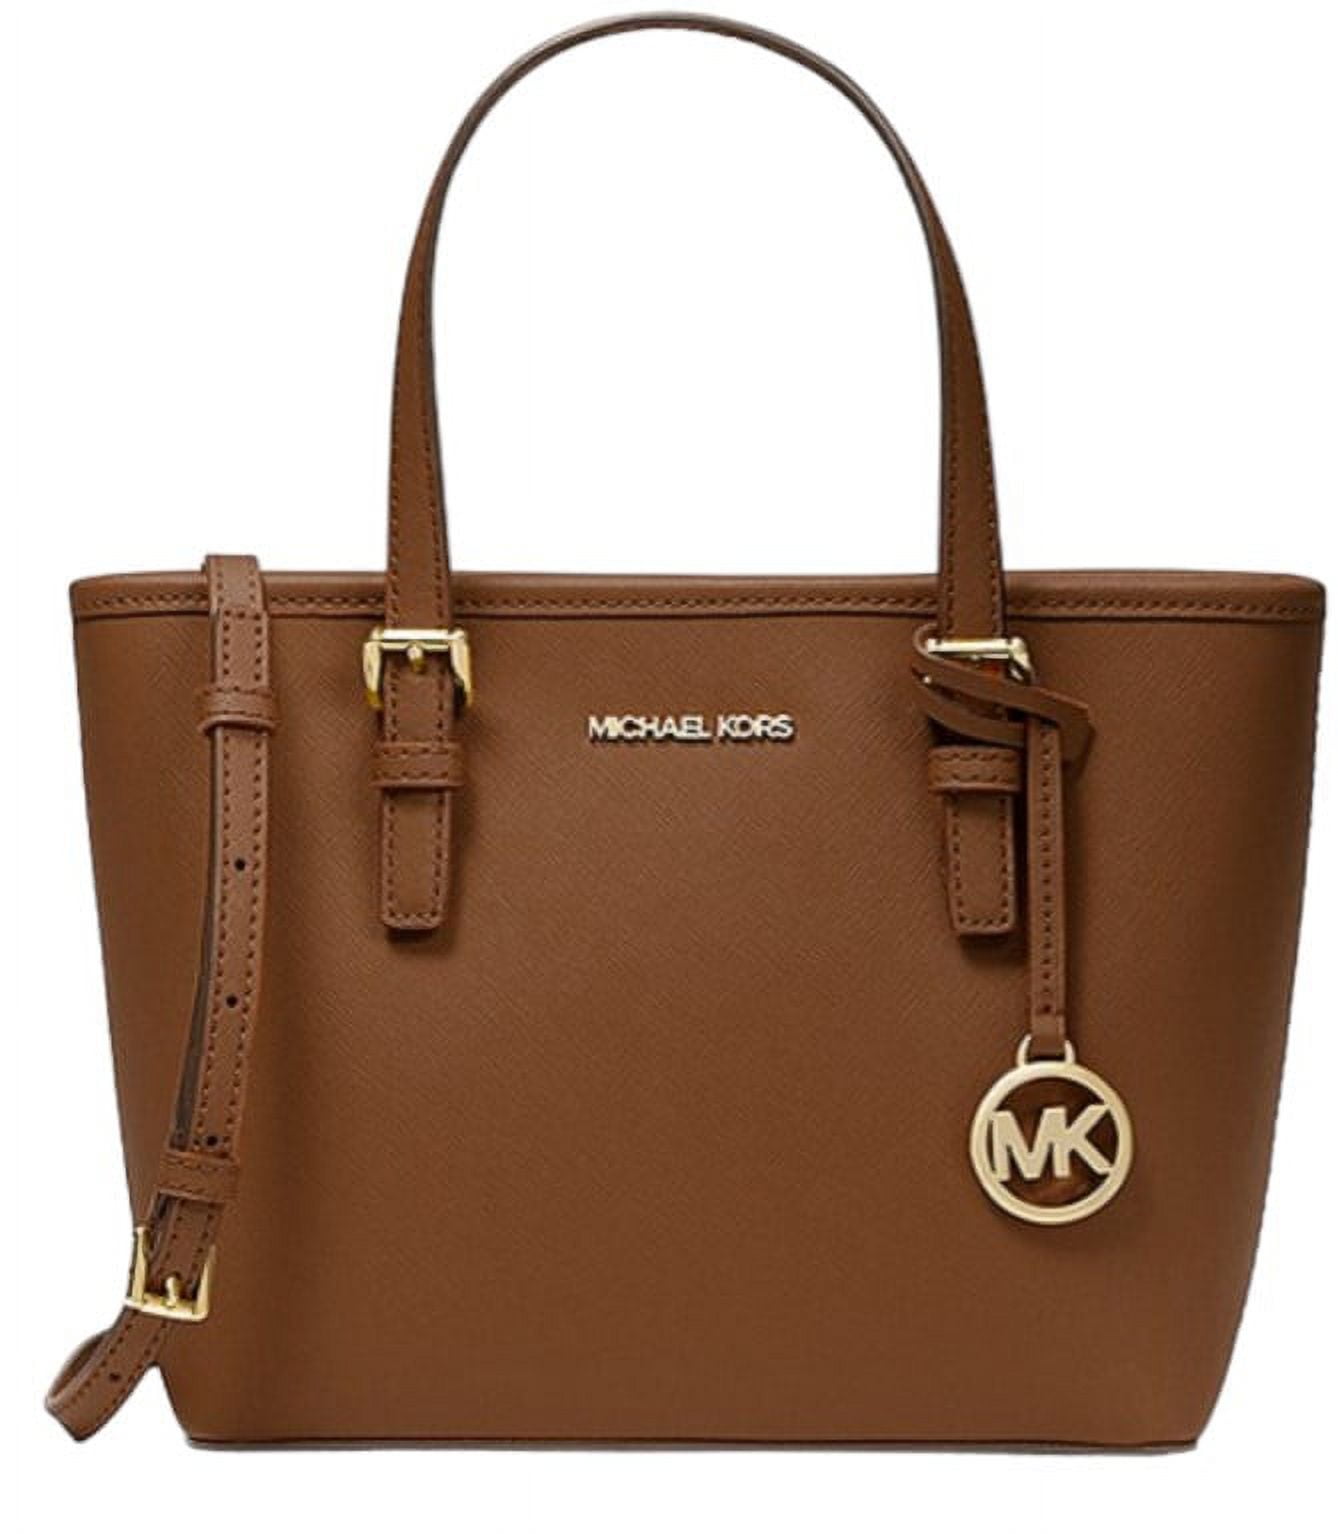 Michael Kors Jet Set Signature Handbag Tote Bag Purse Brown Tan